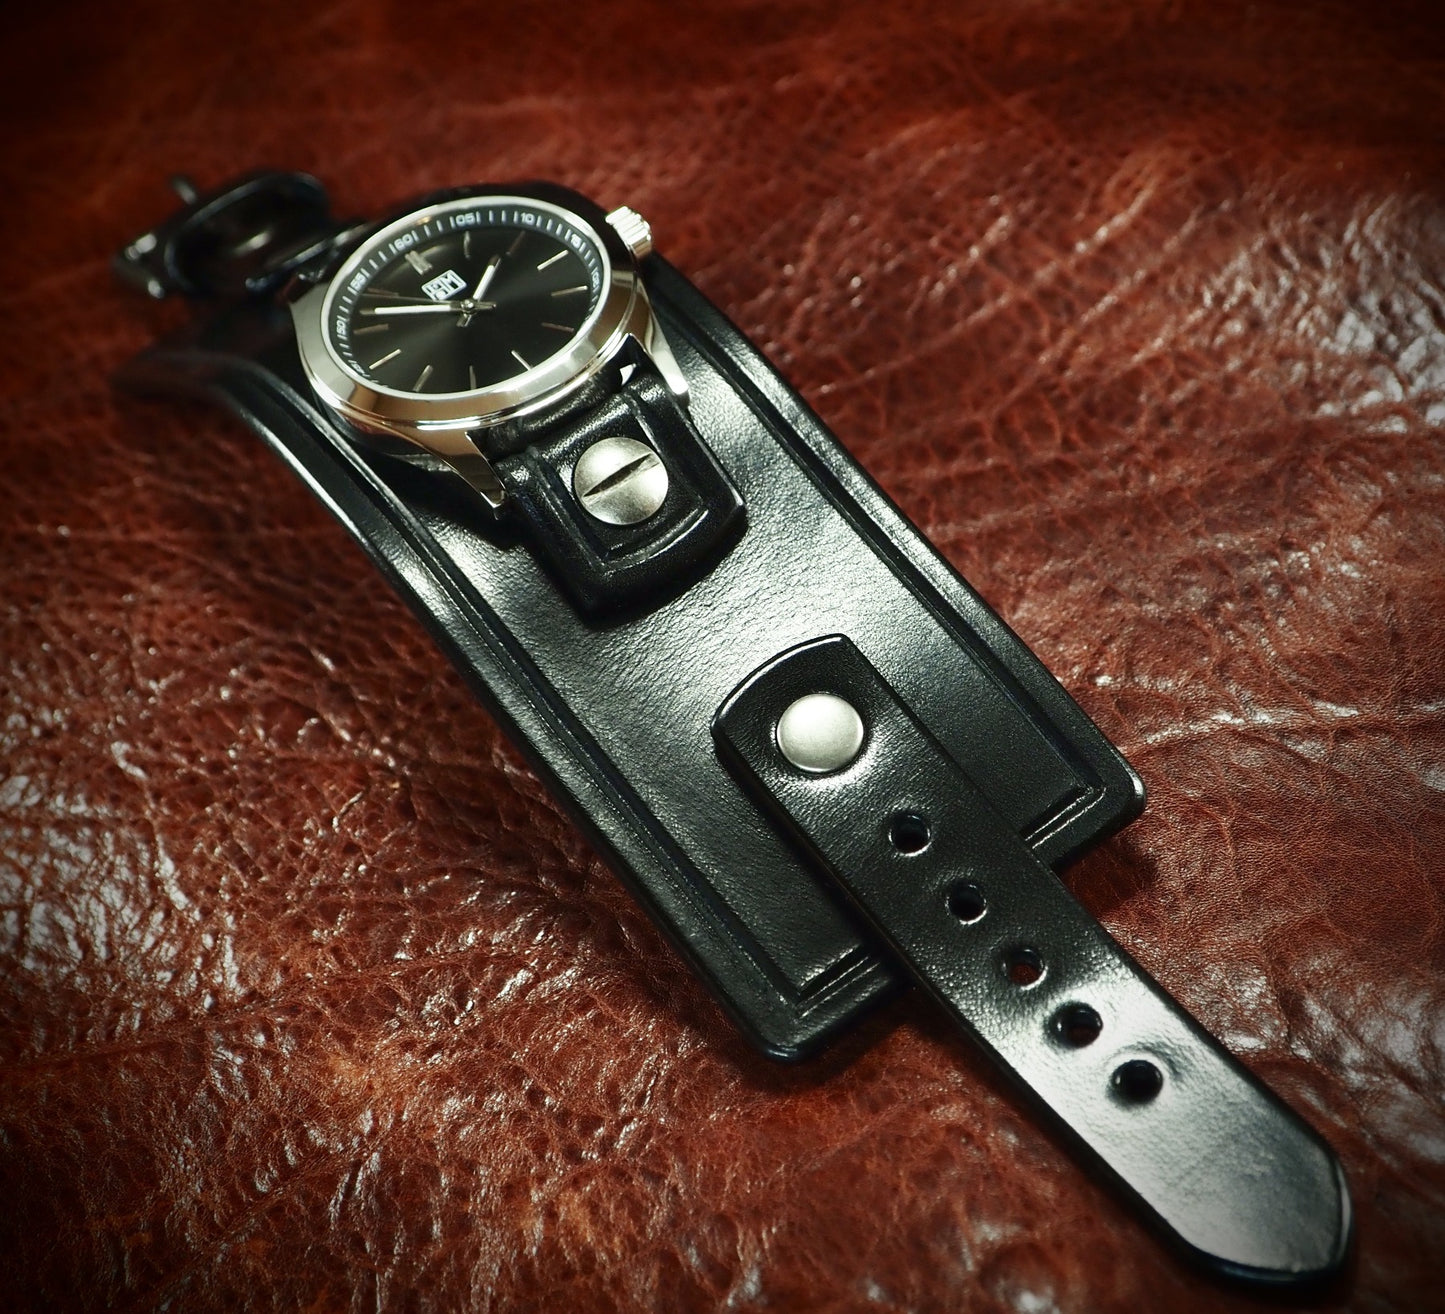 Black Leather cuff watch : Refined American craft